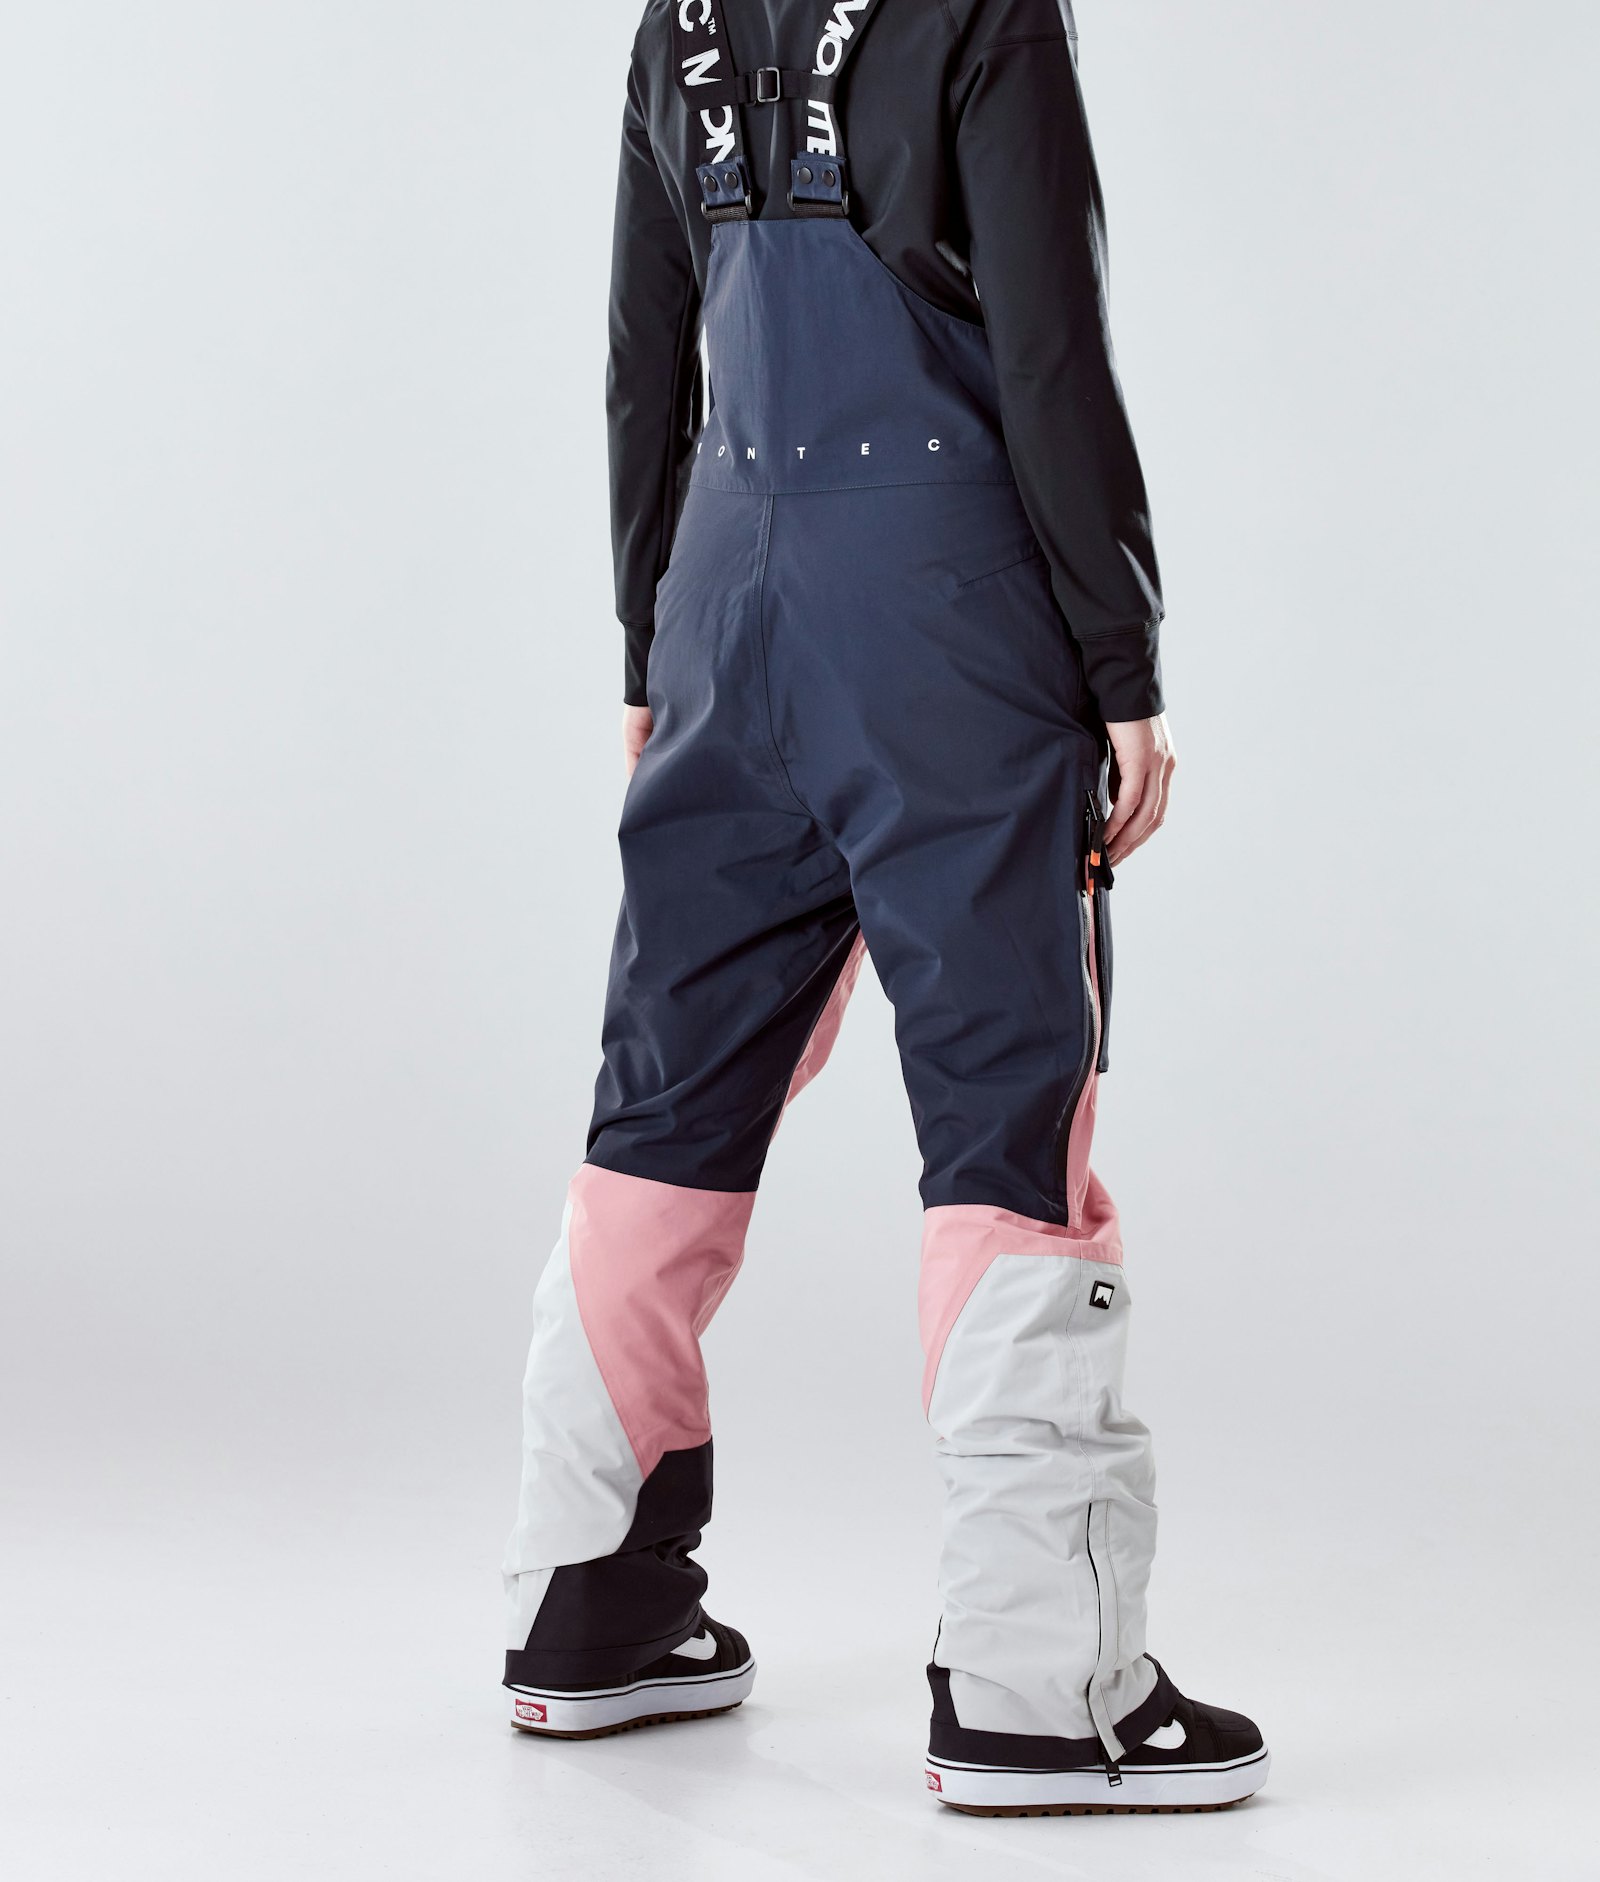 Fawk W 2020 Snowboardhose Damen Marine/Pink/Light Grey